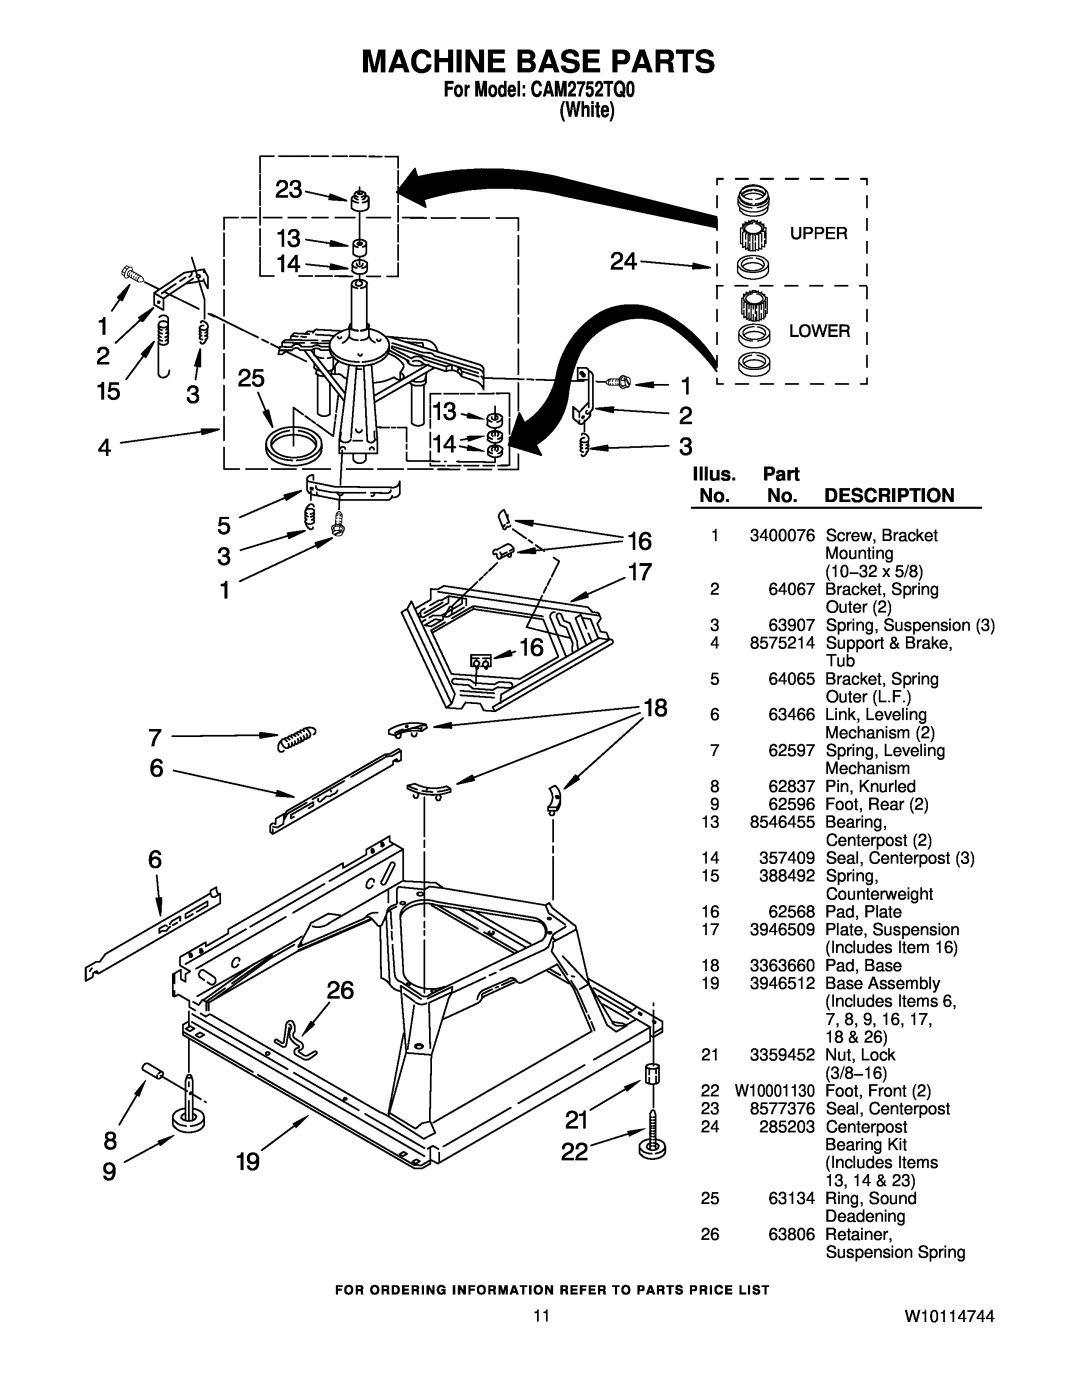 Whirlpool CAM2752TQ0 manual Machine Base Parts, Illus, Description, W10001130 